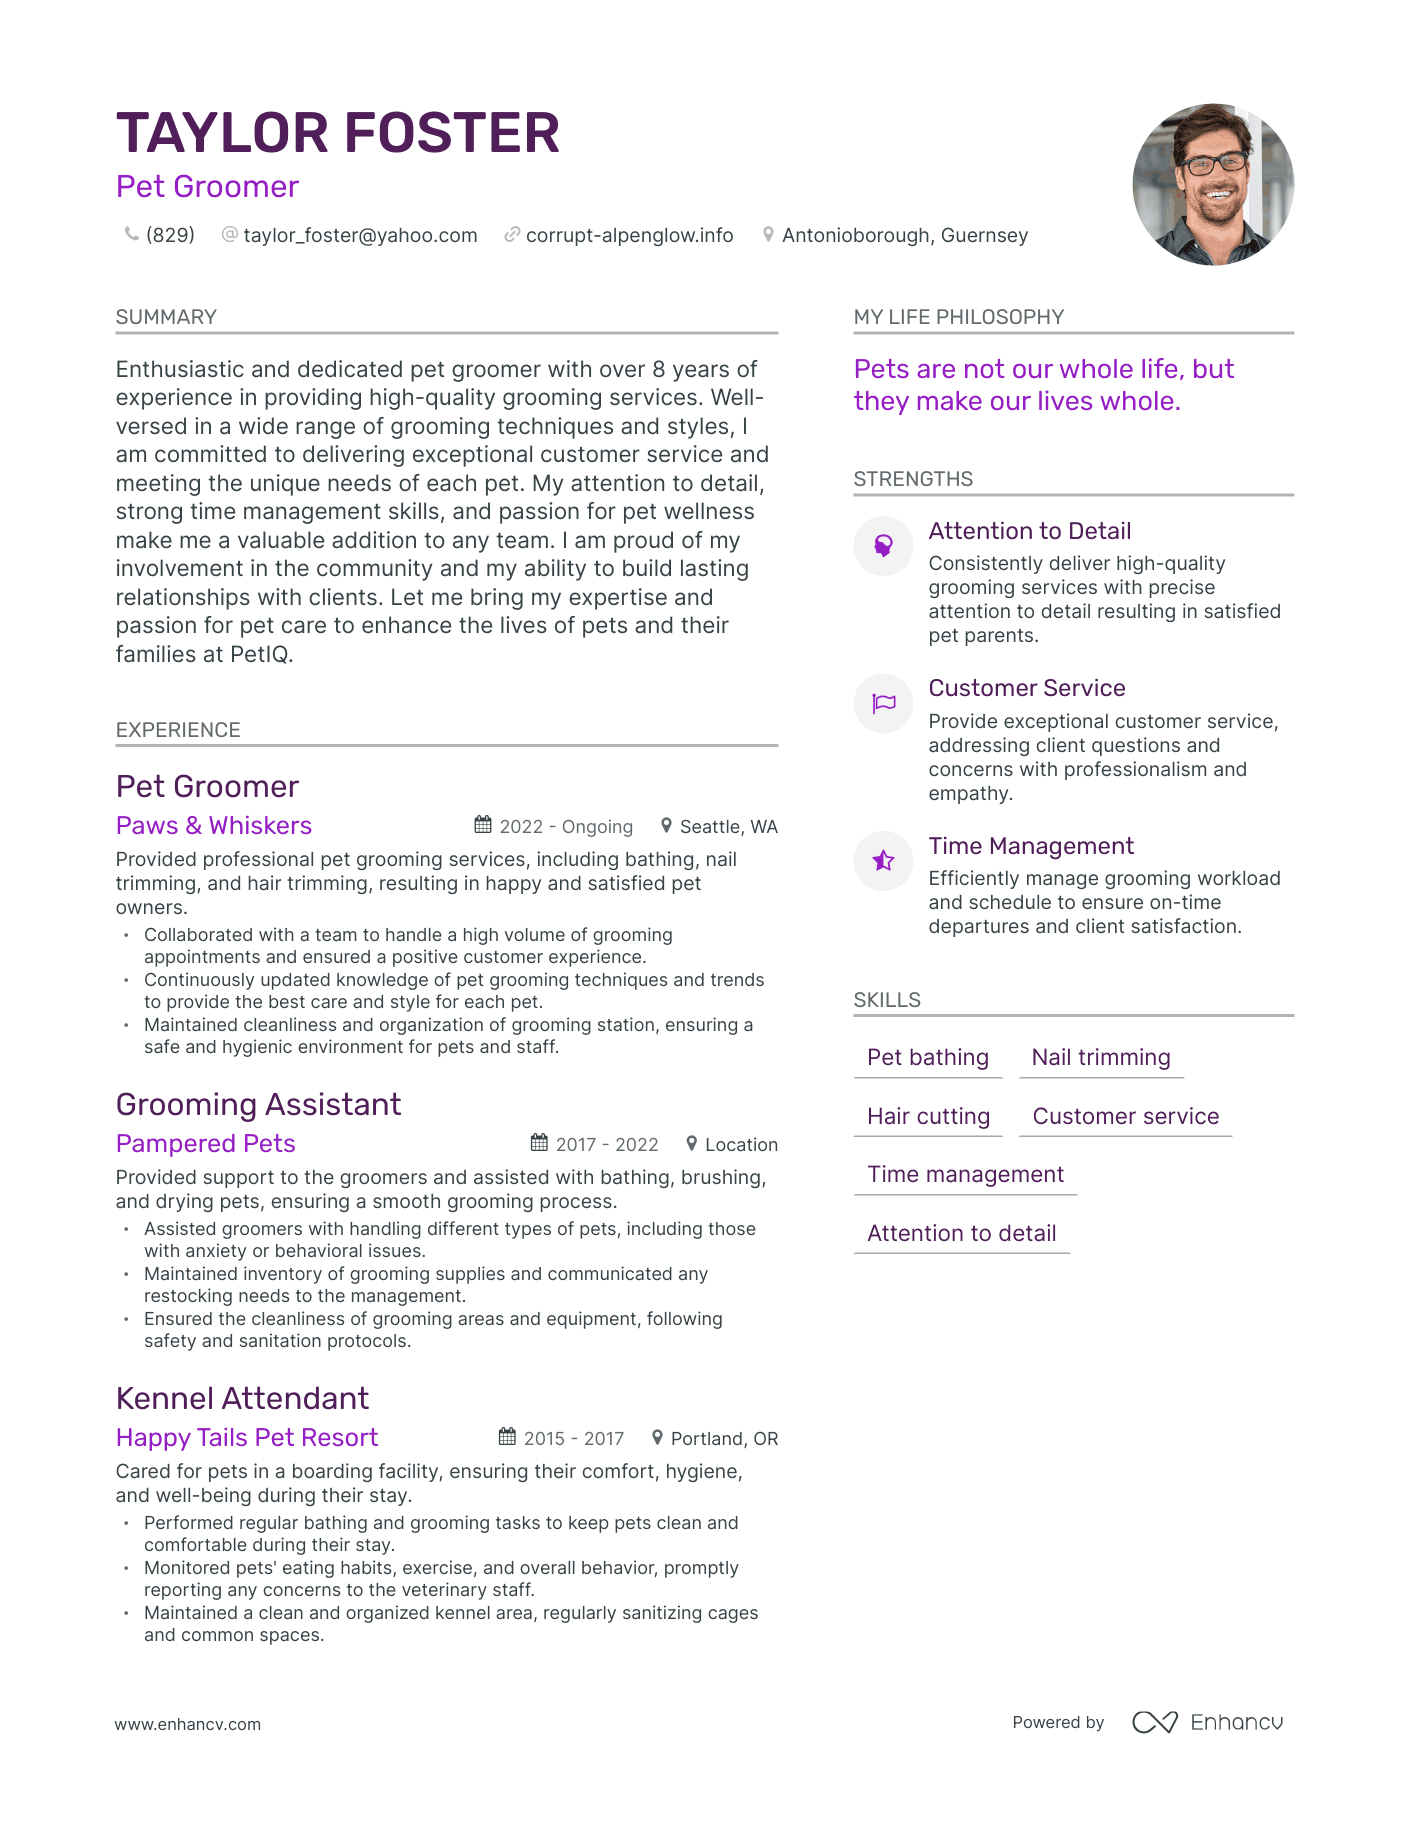 Pet Groomer resume example